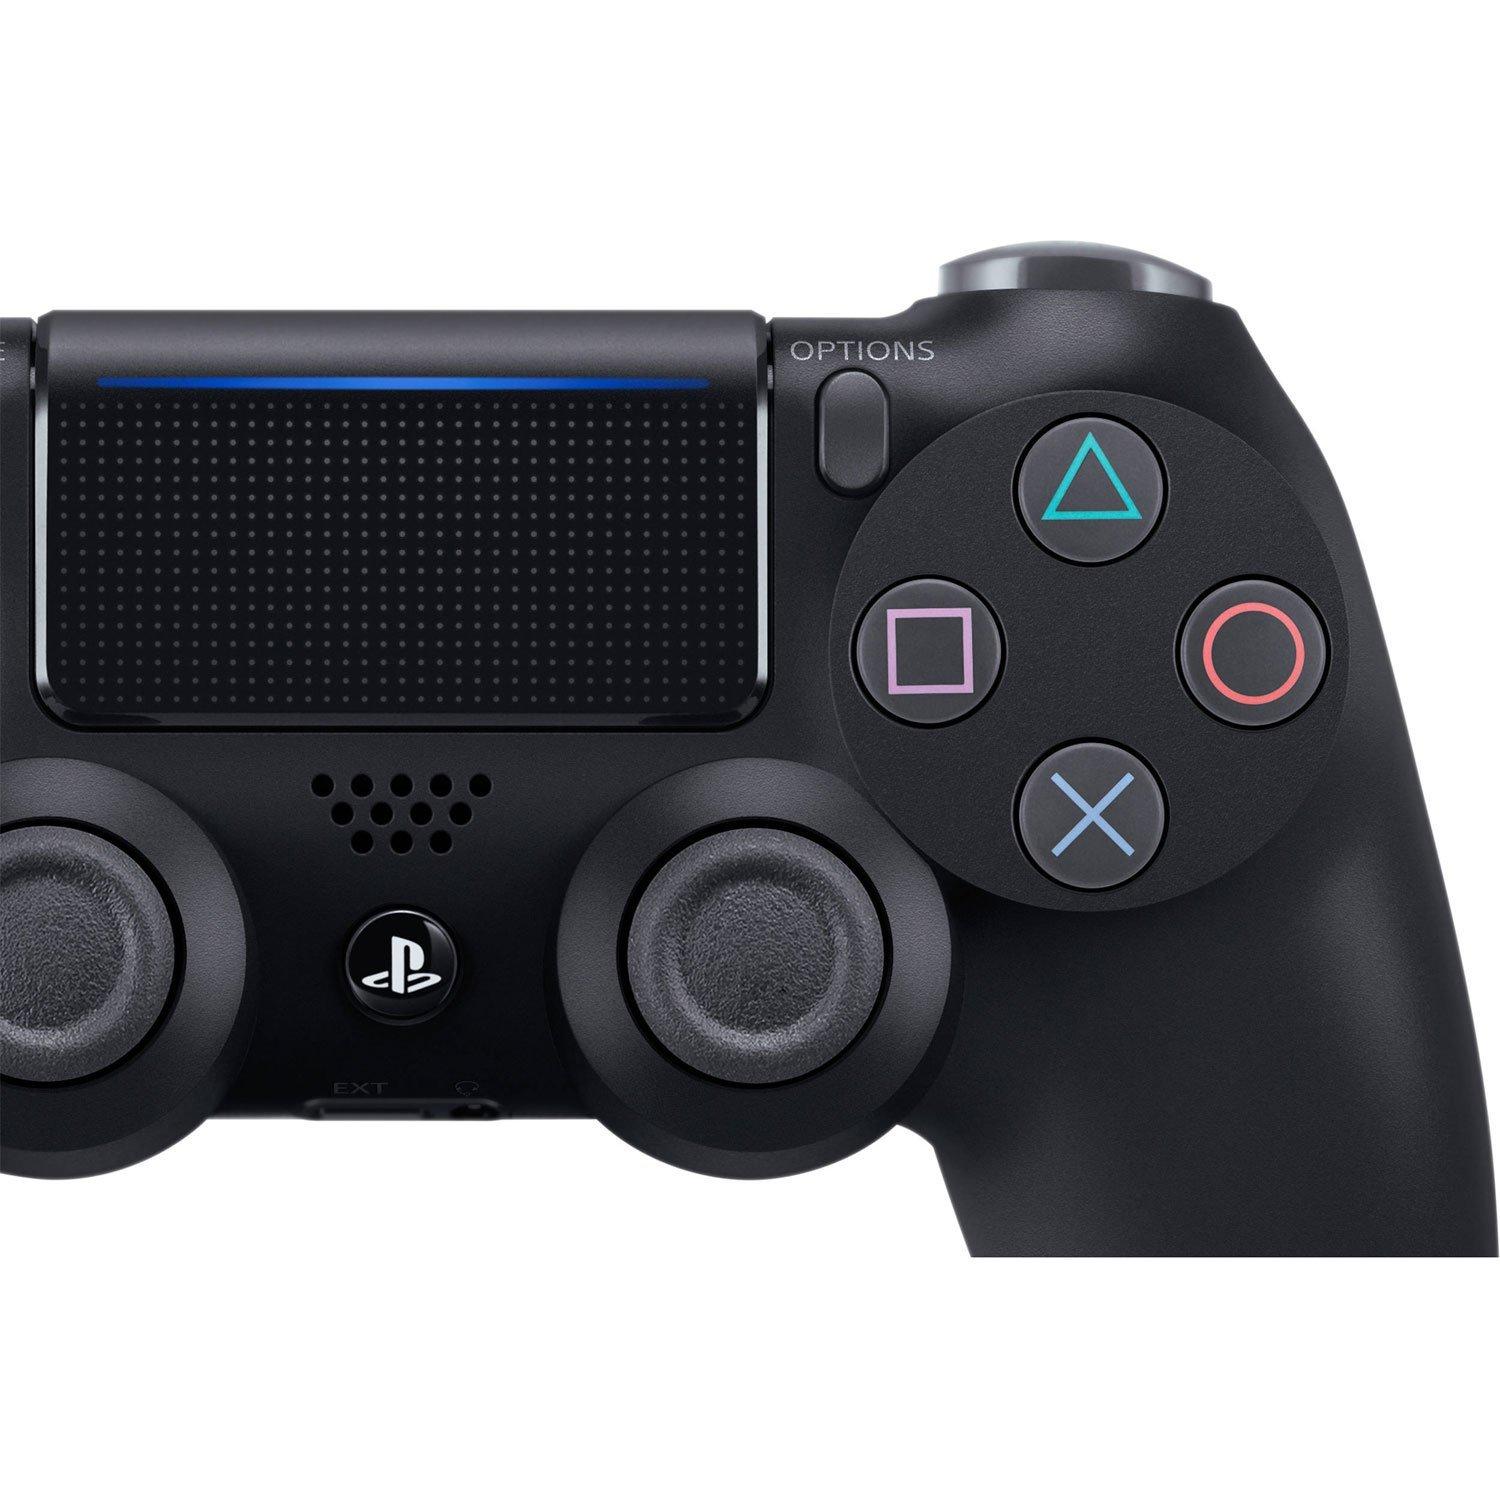 Sony DUALSHOCK 4 Wireless Controller for PlayStation 4 - Black | GameStop